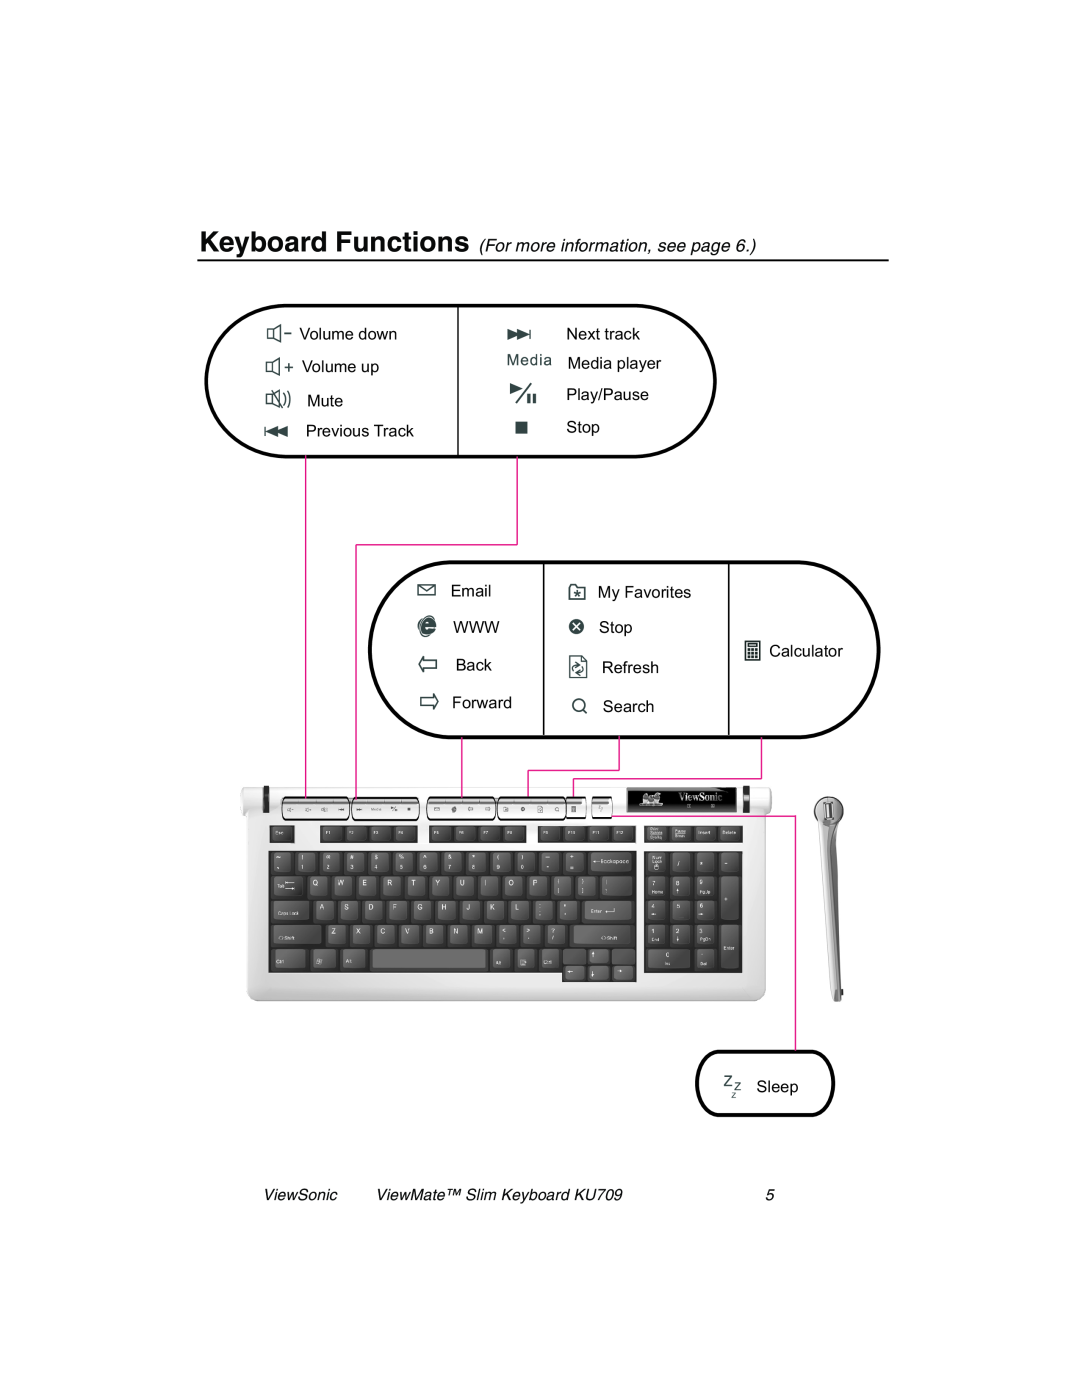 ViewSonic KU709 manual Keyboard Functions For more information, see page, Search, Calculator, Sleep, ViewSonic 